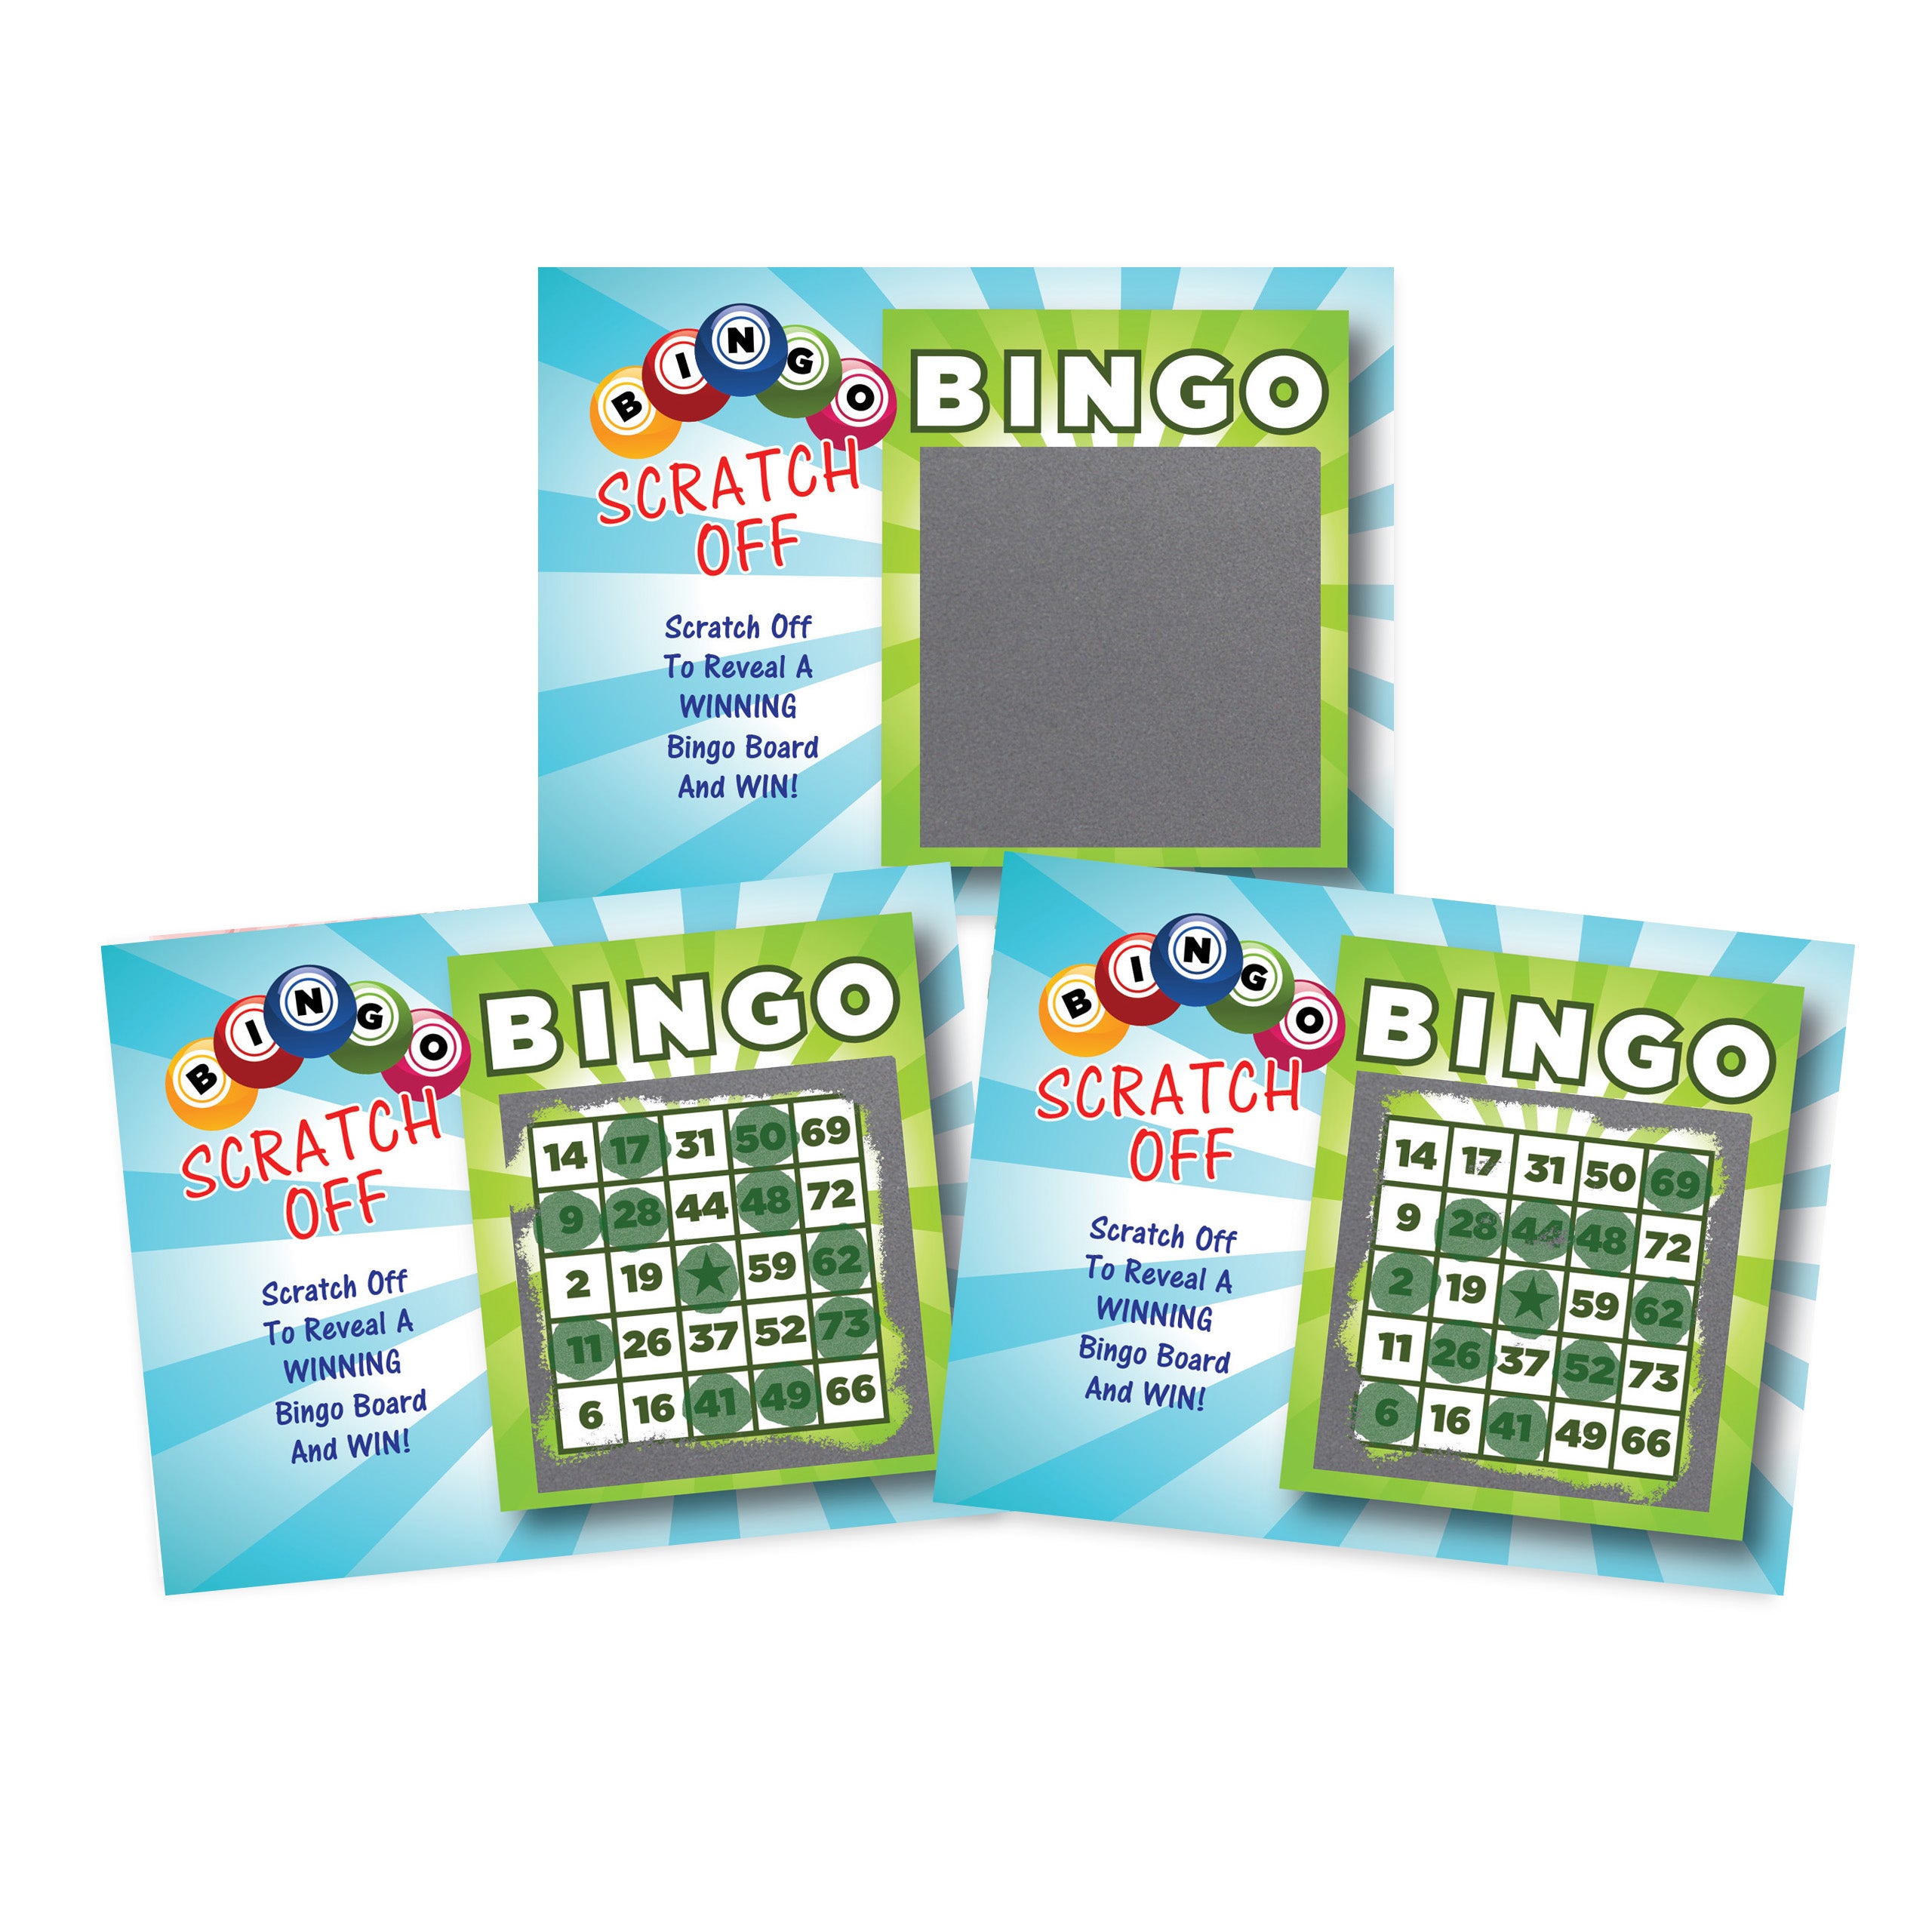 Casino Night Party Bingo Scratch Off Game Cards 26 Pack - 2 Bingo and 24 Non-Bingo Cards - My Scratch Offs